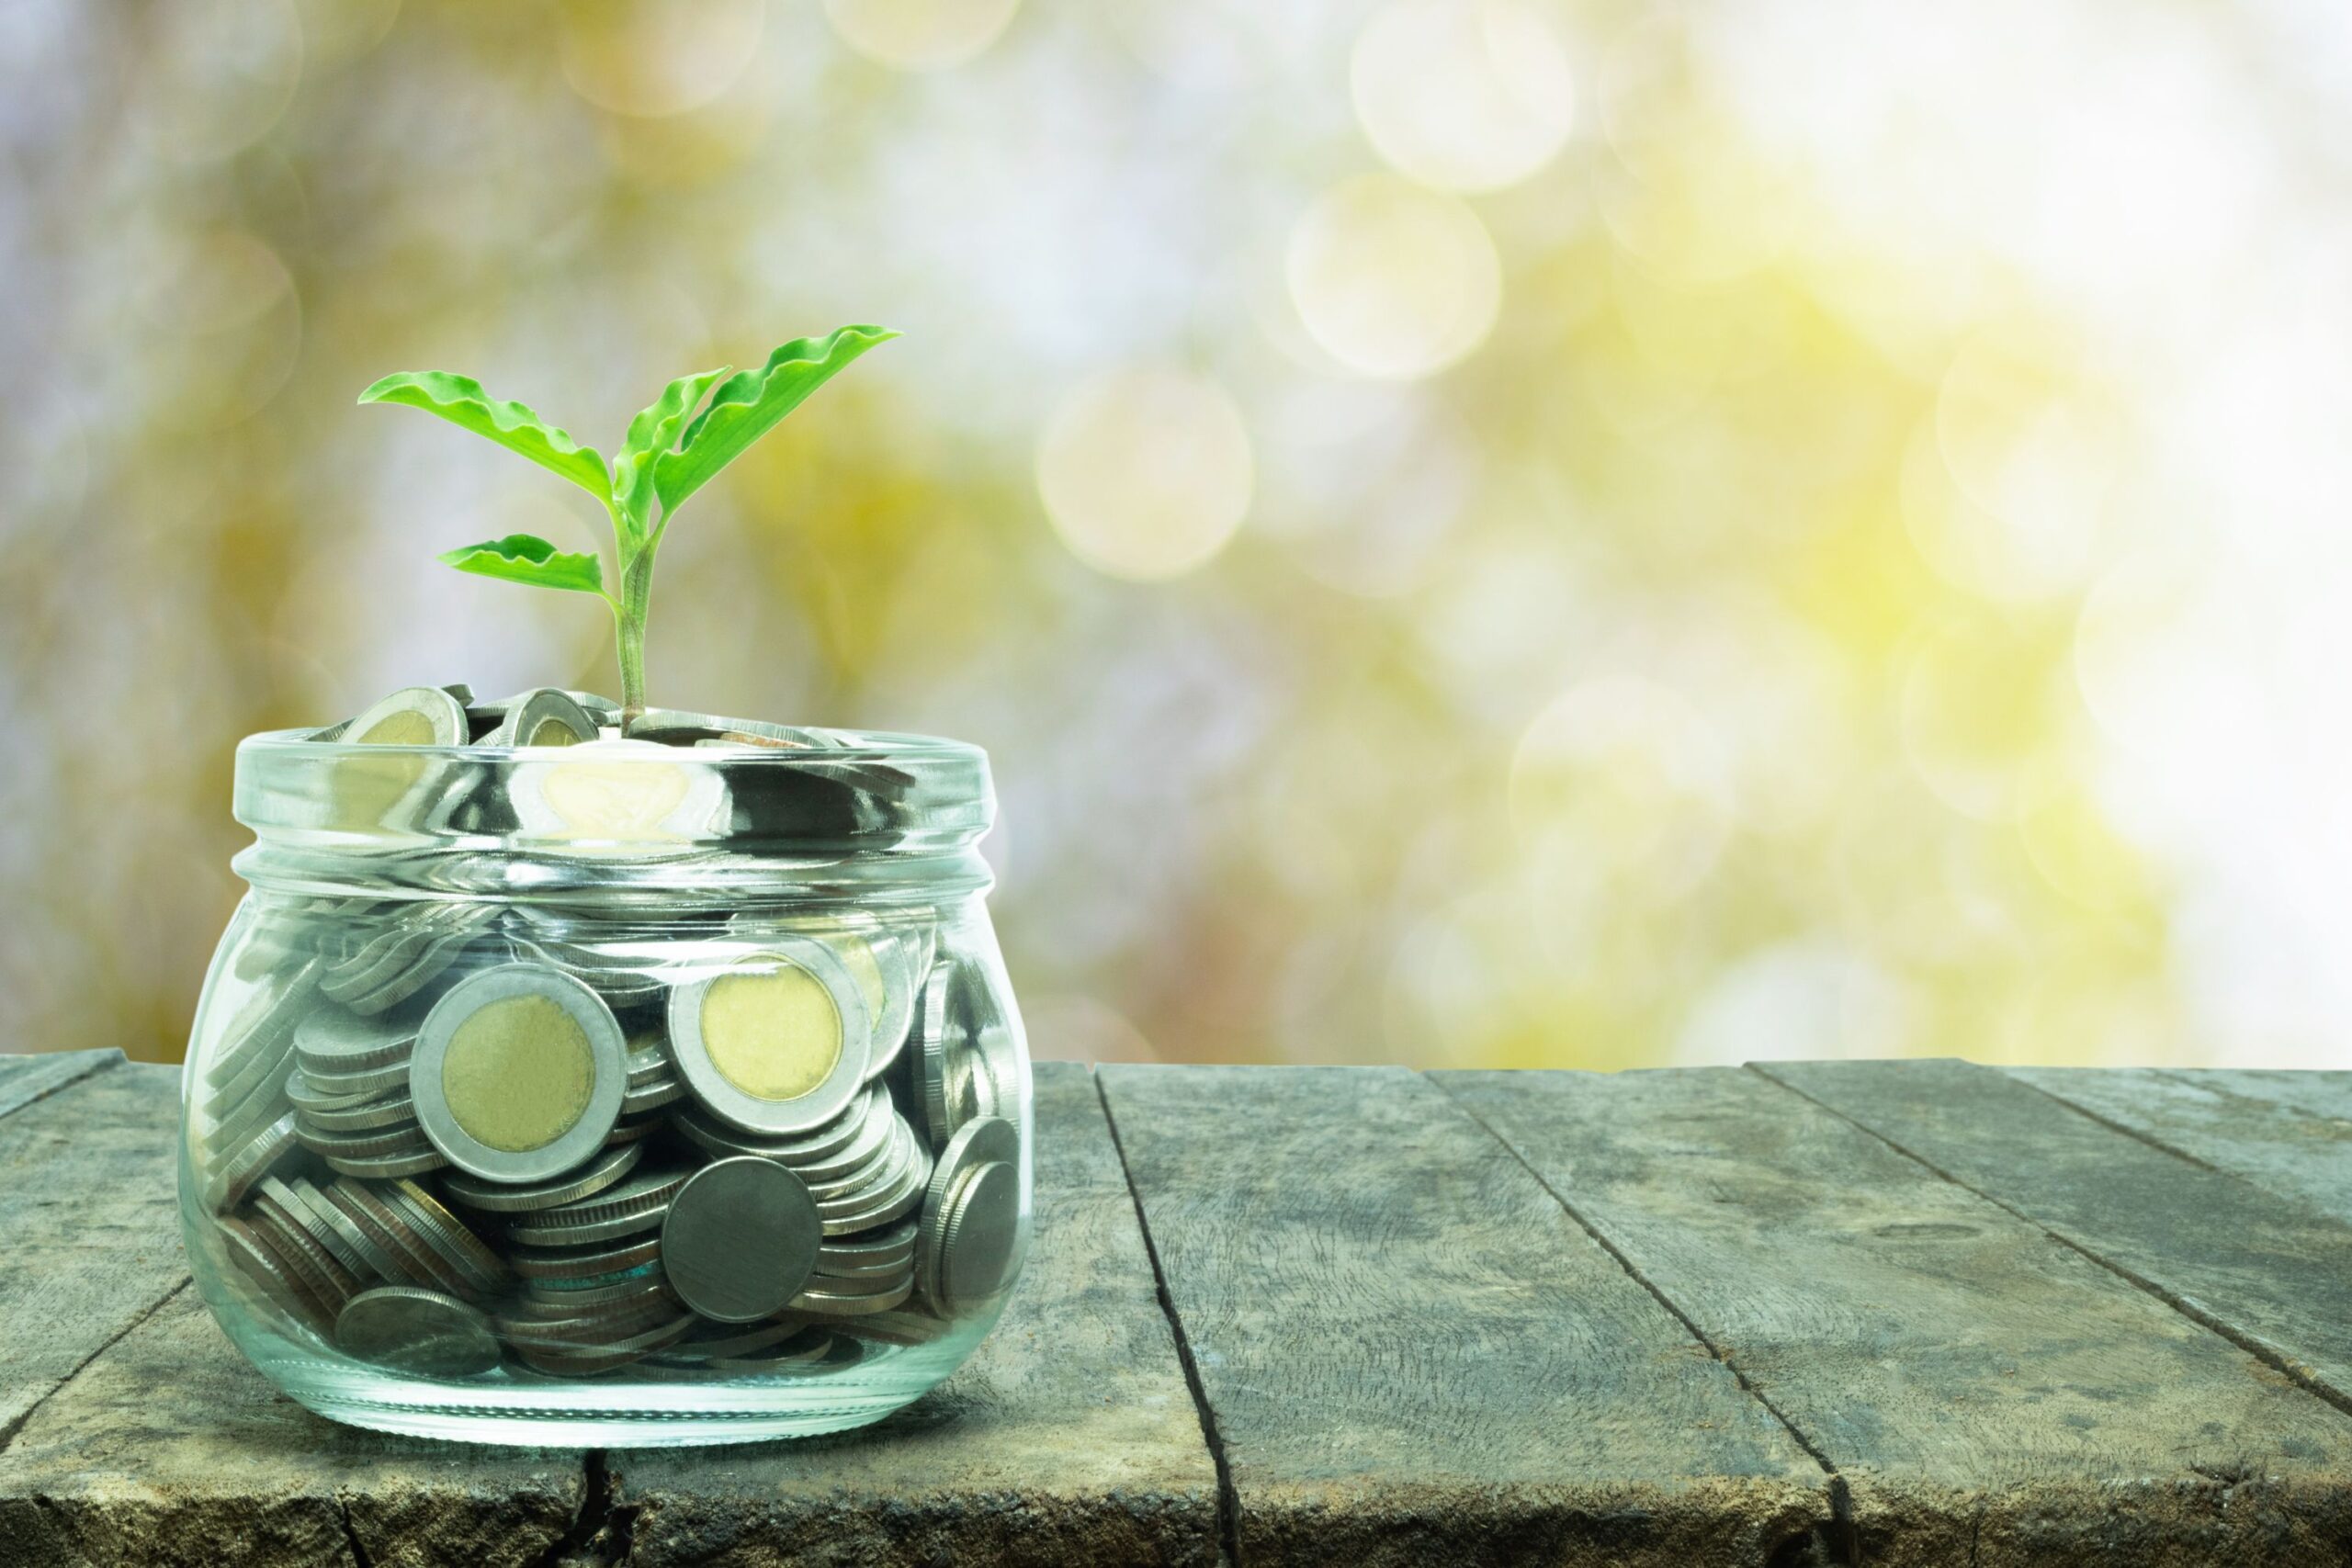 tree-grow-jar-coin-symbol-margin-business